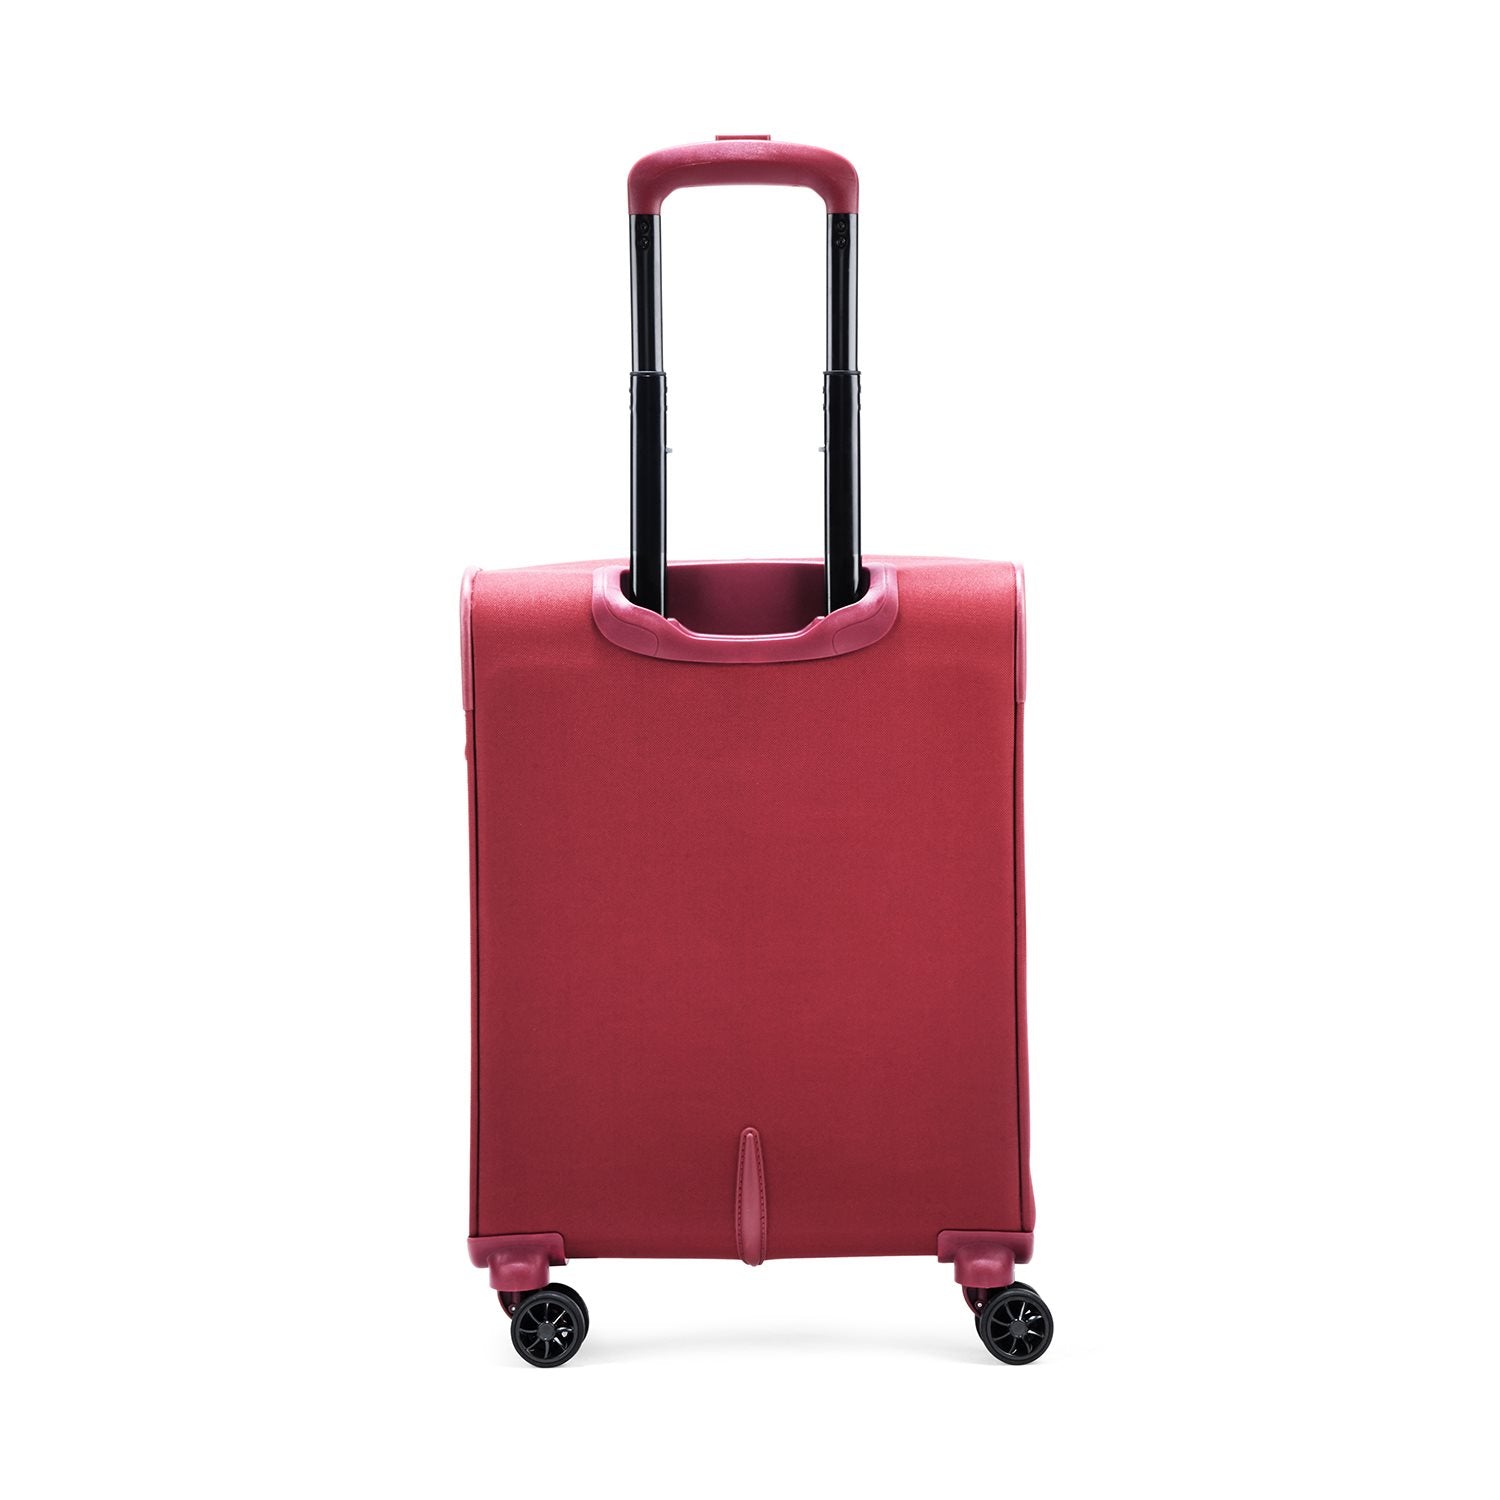 Carlton Turbolite Plus - Handbagage Koffer - 55 cm - Rhubarb Handbagage Koffer - Reisartikelen-nl